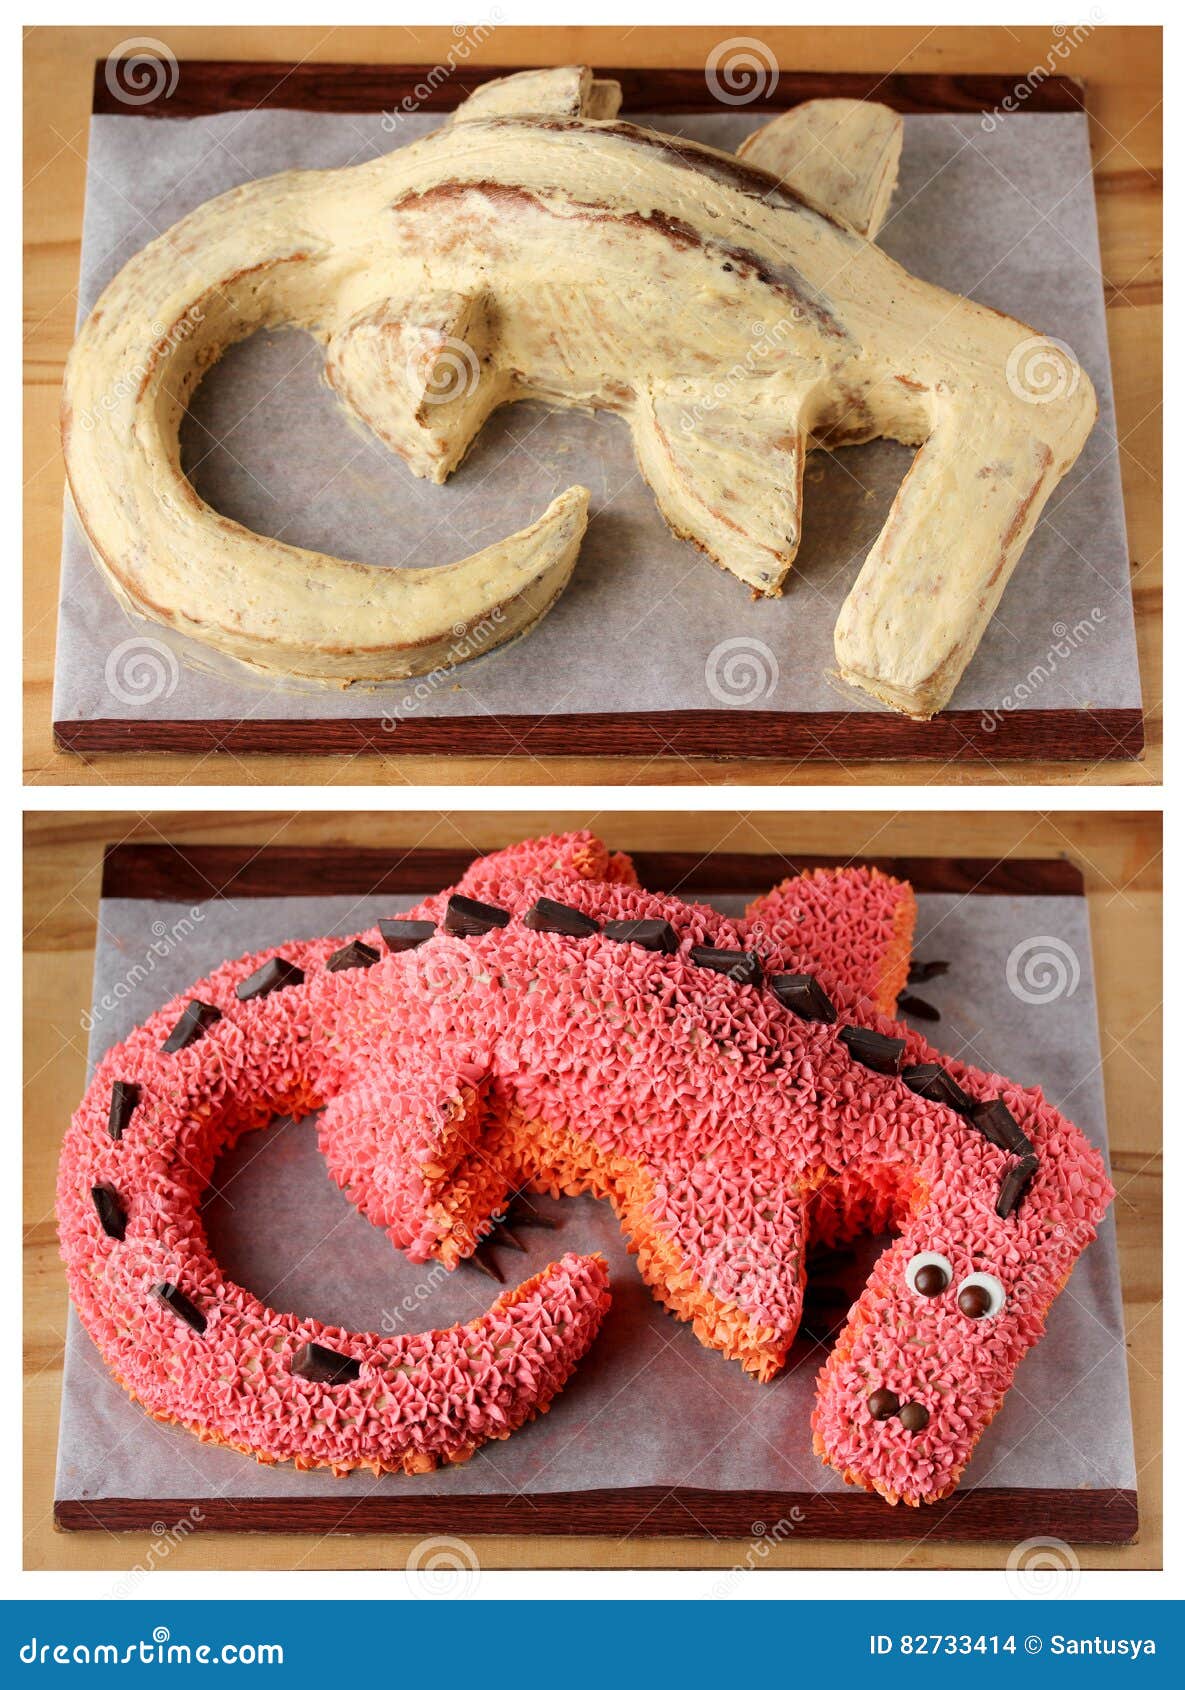 Blue Dragon Cake | Dragon Theme Cake | Birthday Cake For Kids – Liliyum  Patisserie & Cafe